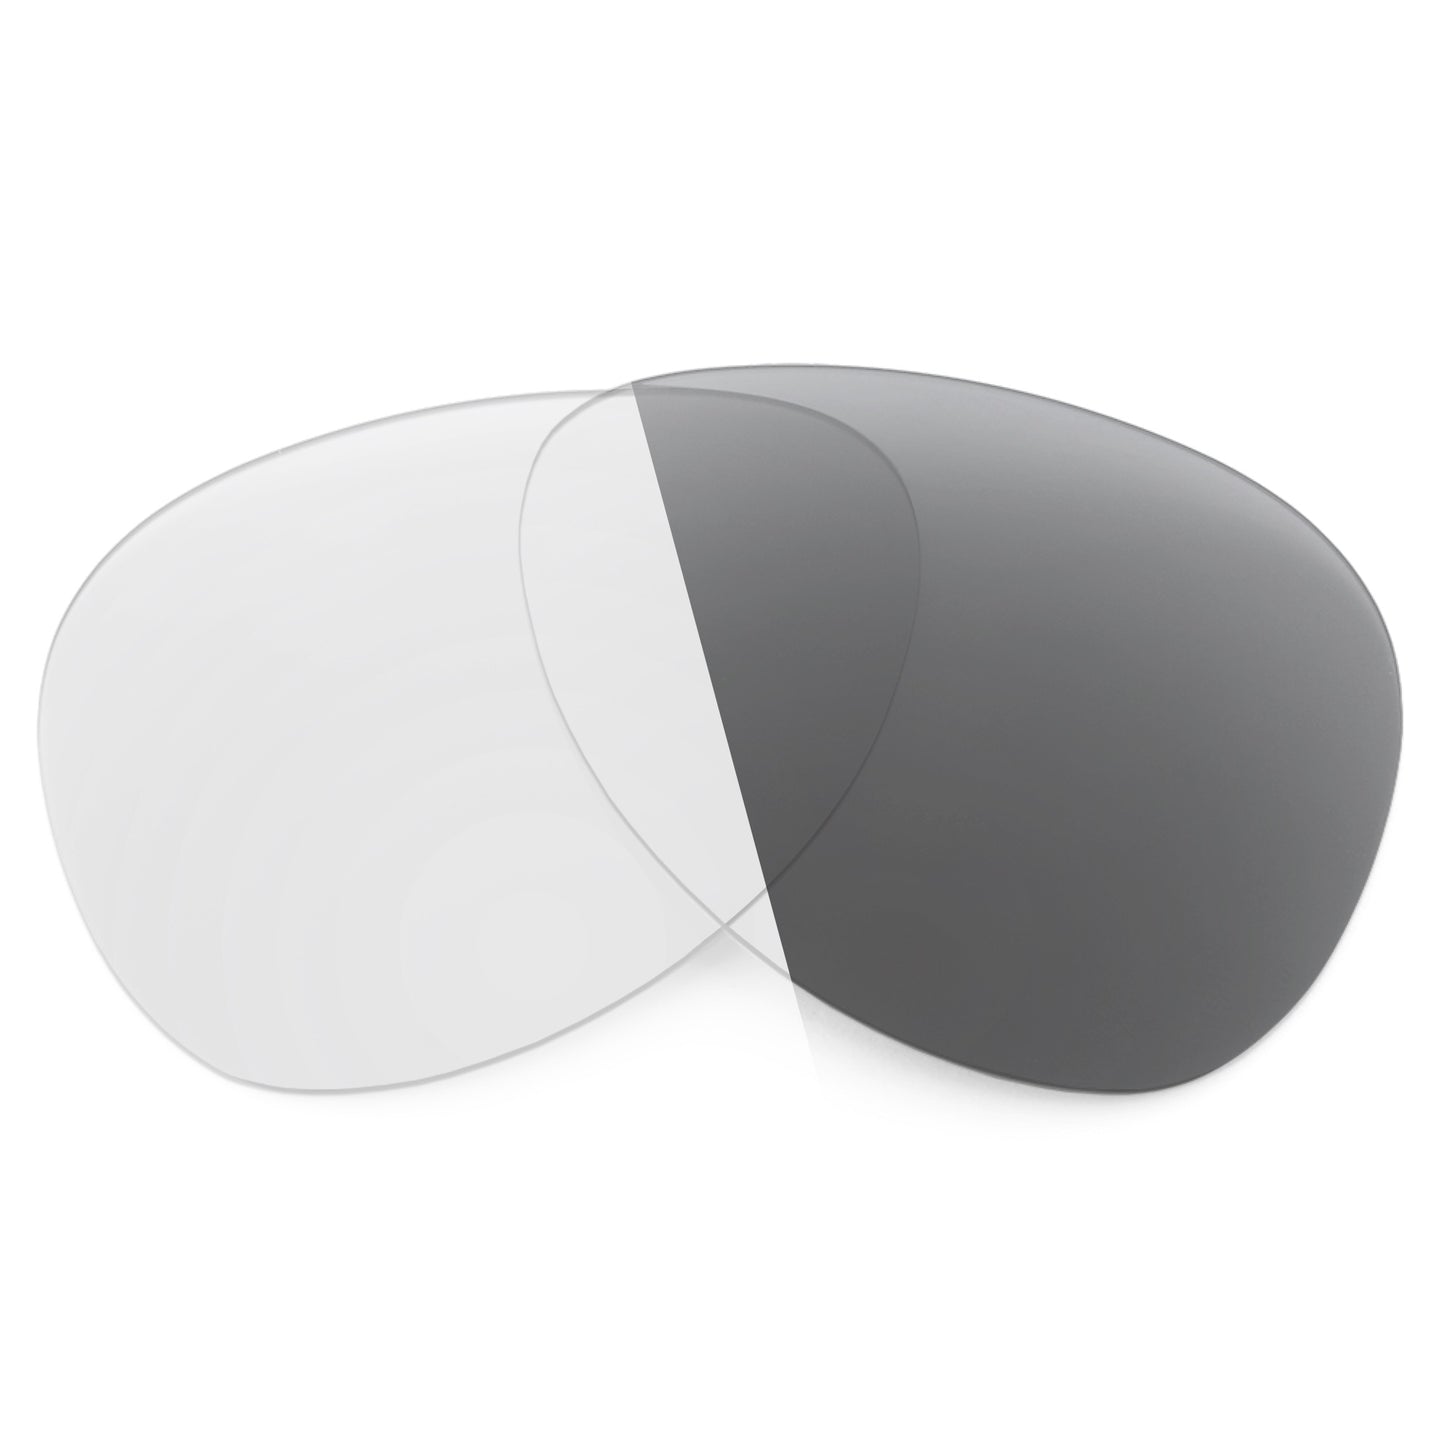 Revant replacement lenses for Maui Jim Swinging Bridges MJ787 Non-Polarized Adapt Gray Photochromic